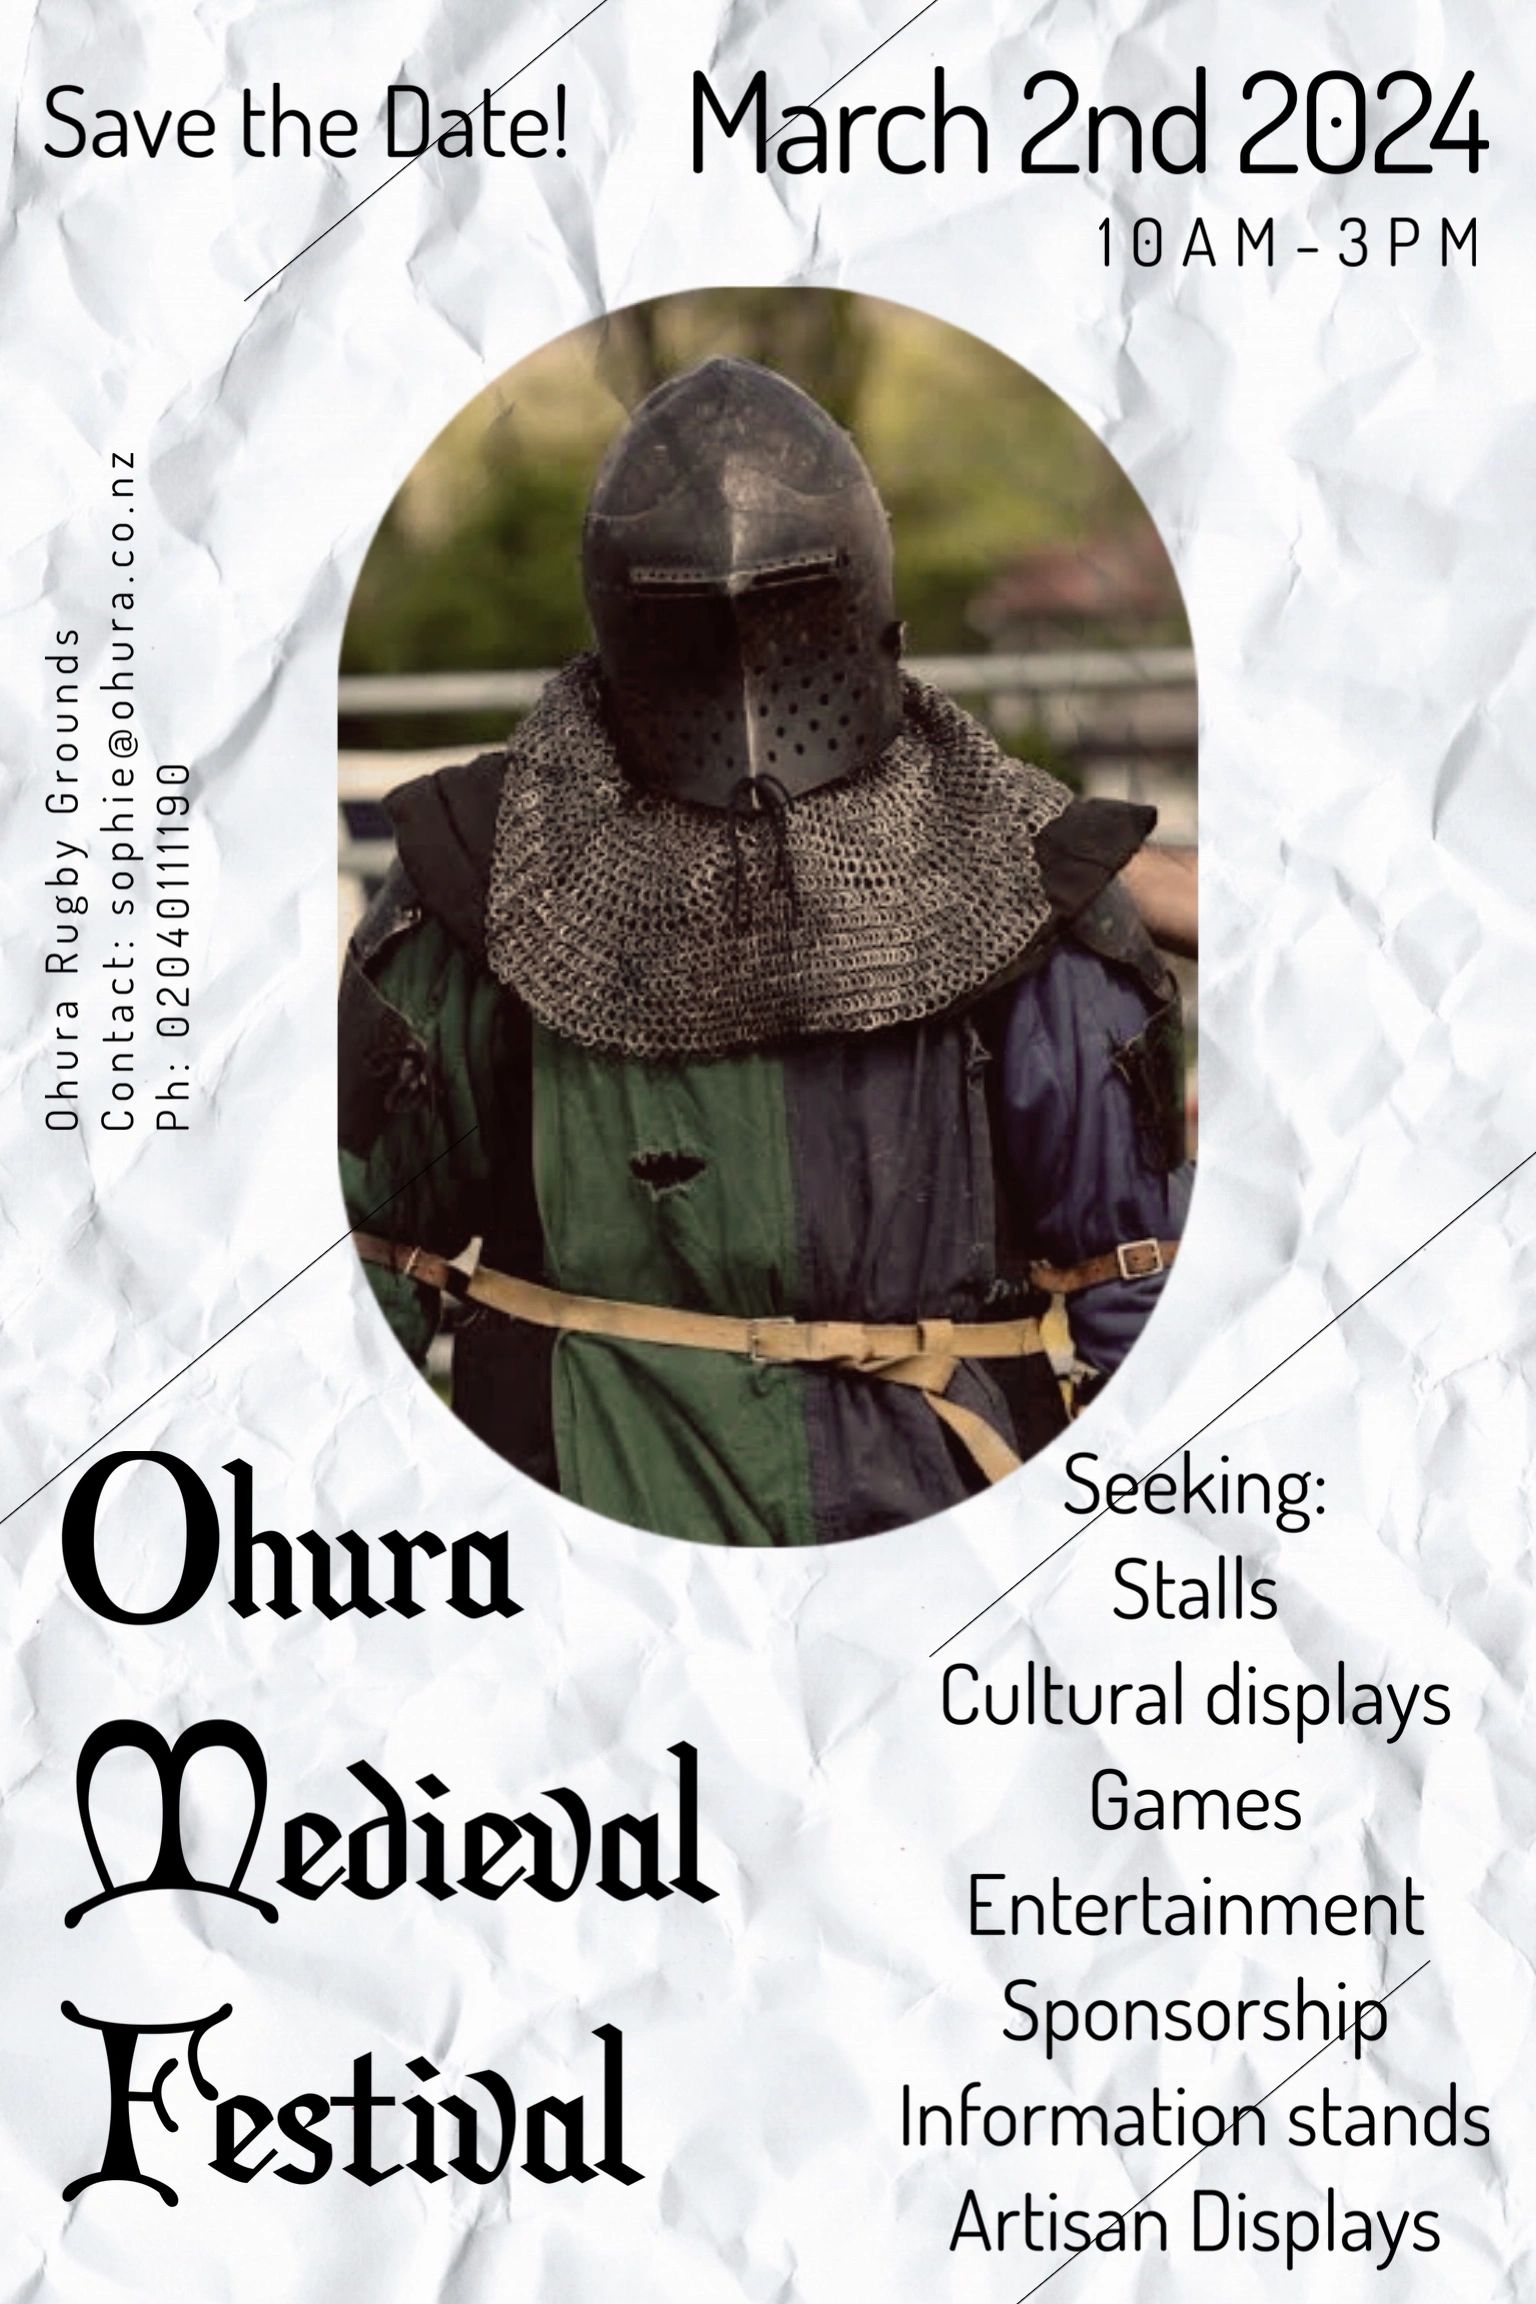 Ohura Medieval Festival is Back 